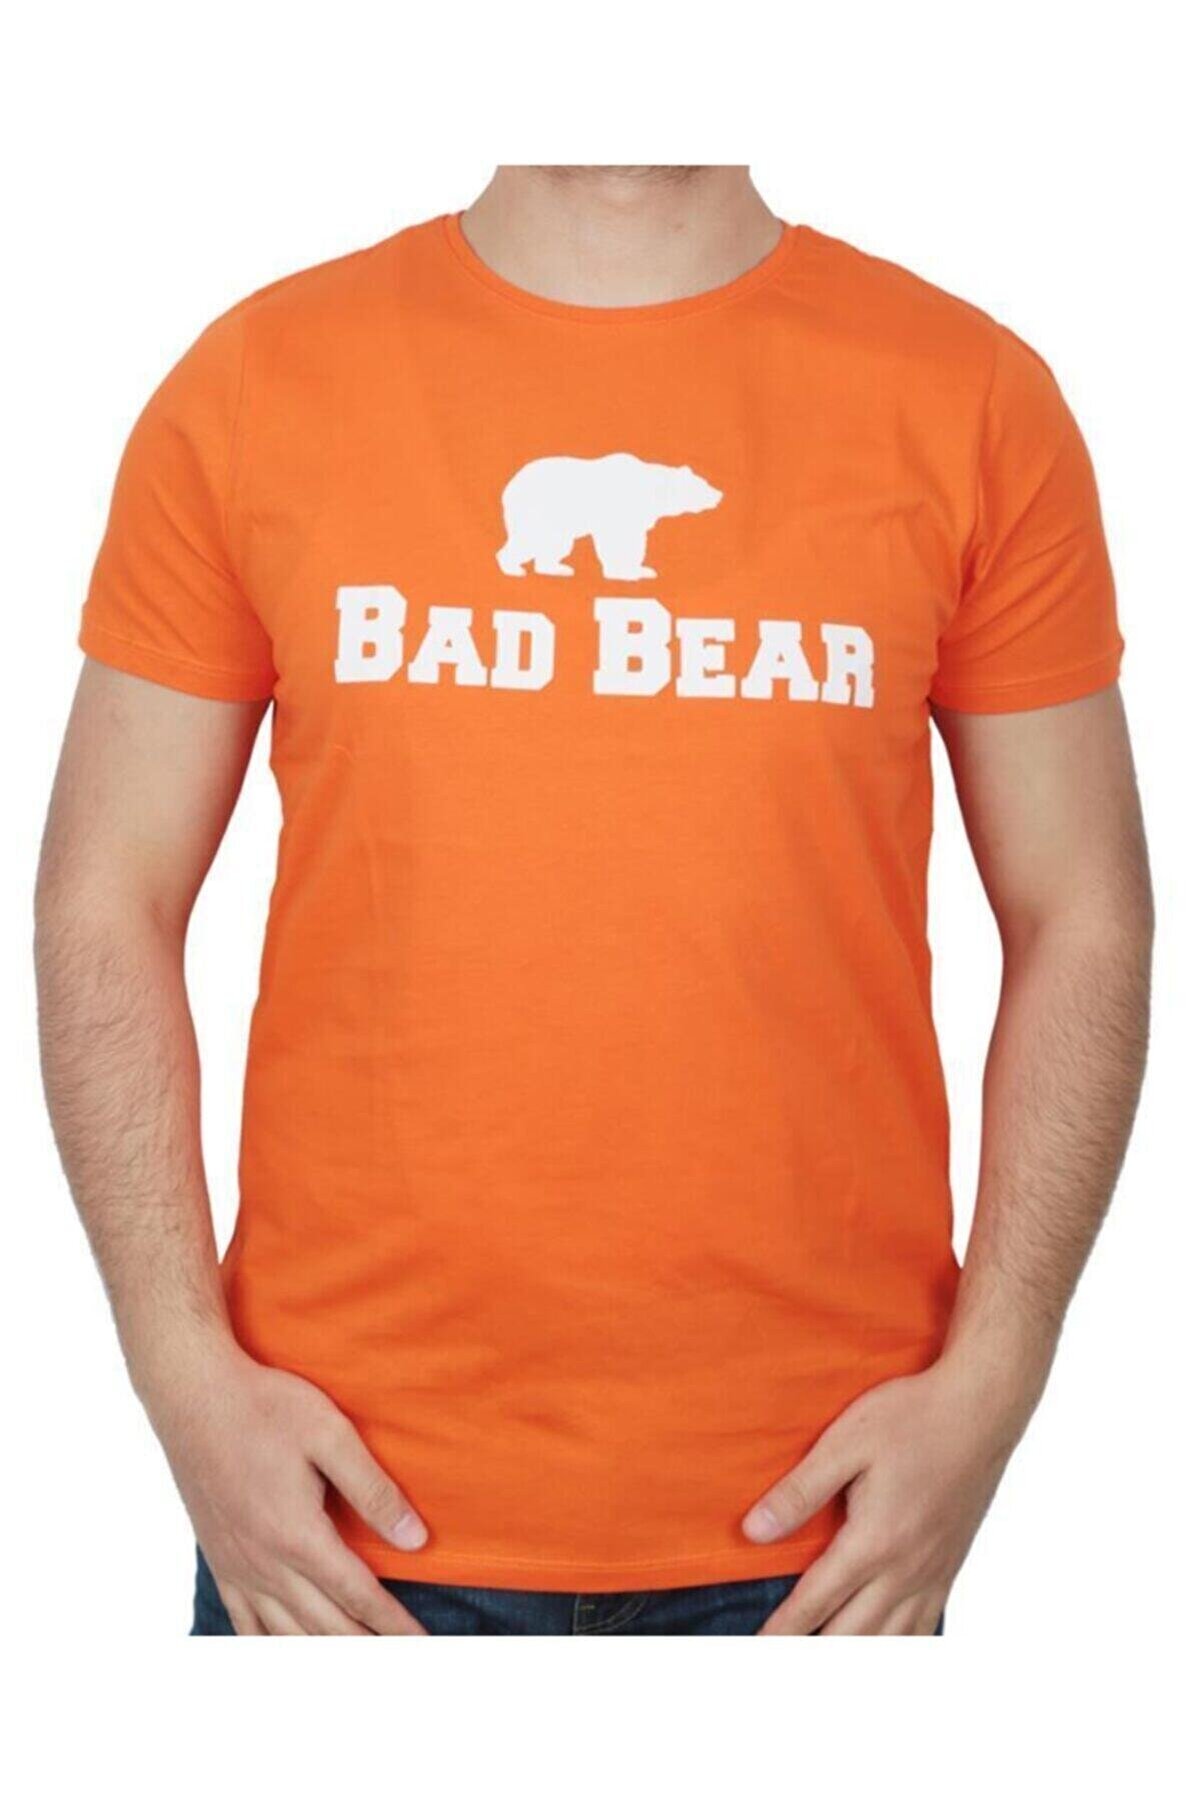 Bad Bear Erkek Turuncu Baskılı T-shirt - 19.01.07.002